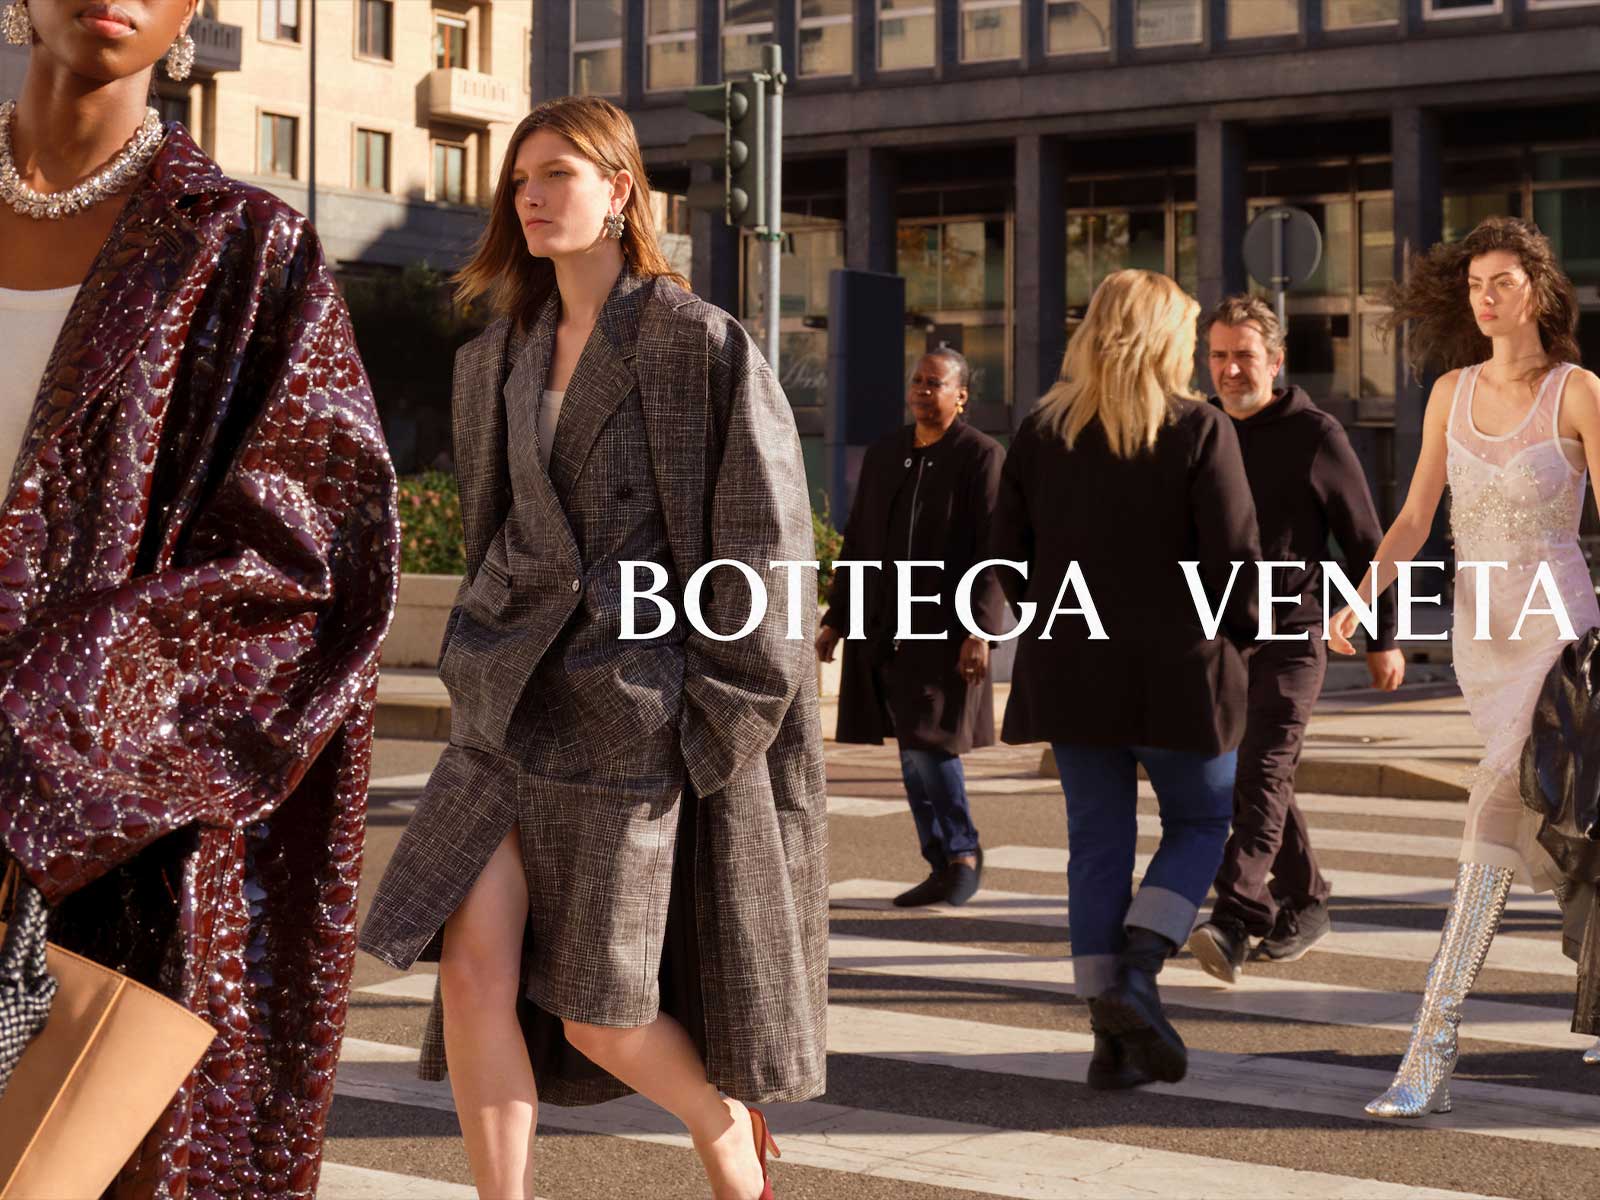 Bottega Veneta launches new Summer 2023 campaign